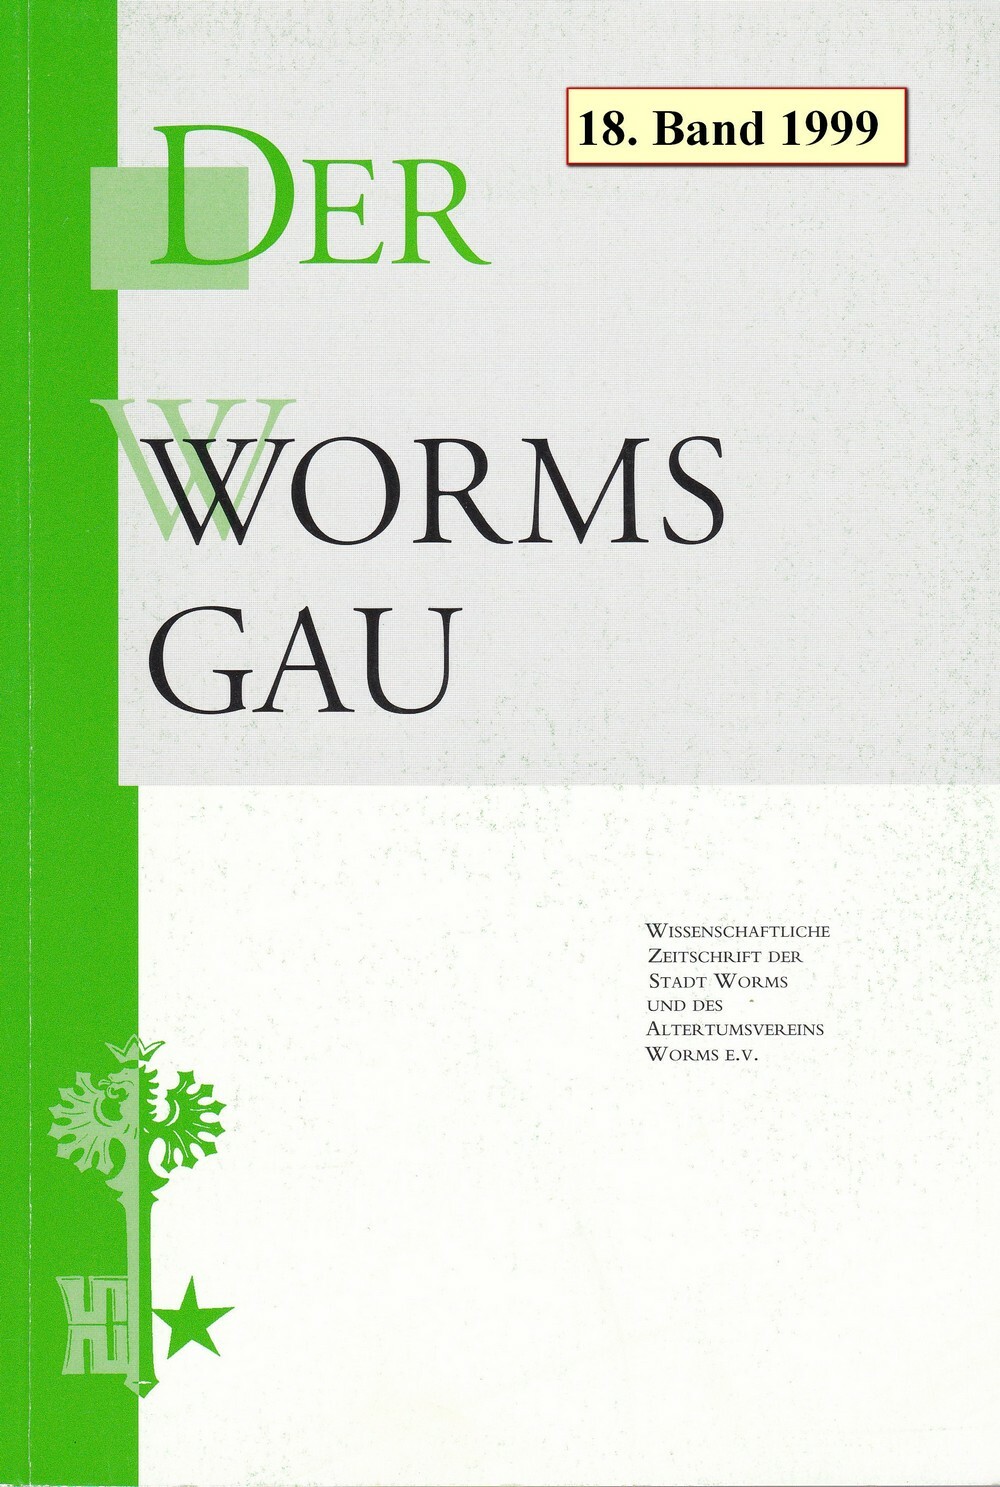 Der Wormsgau 18. Band - 1999 (Museum Guntersblum CC BY-NC-SA)